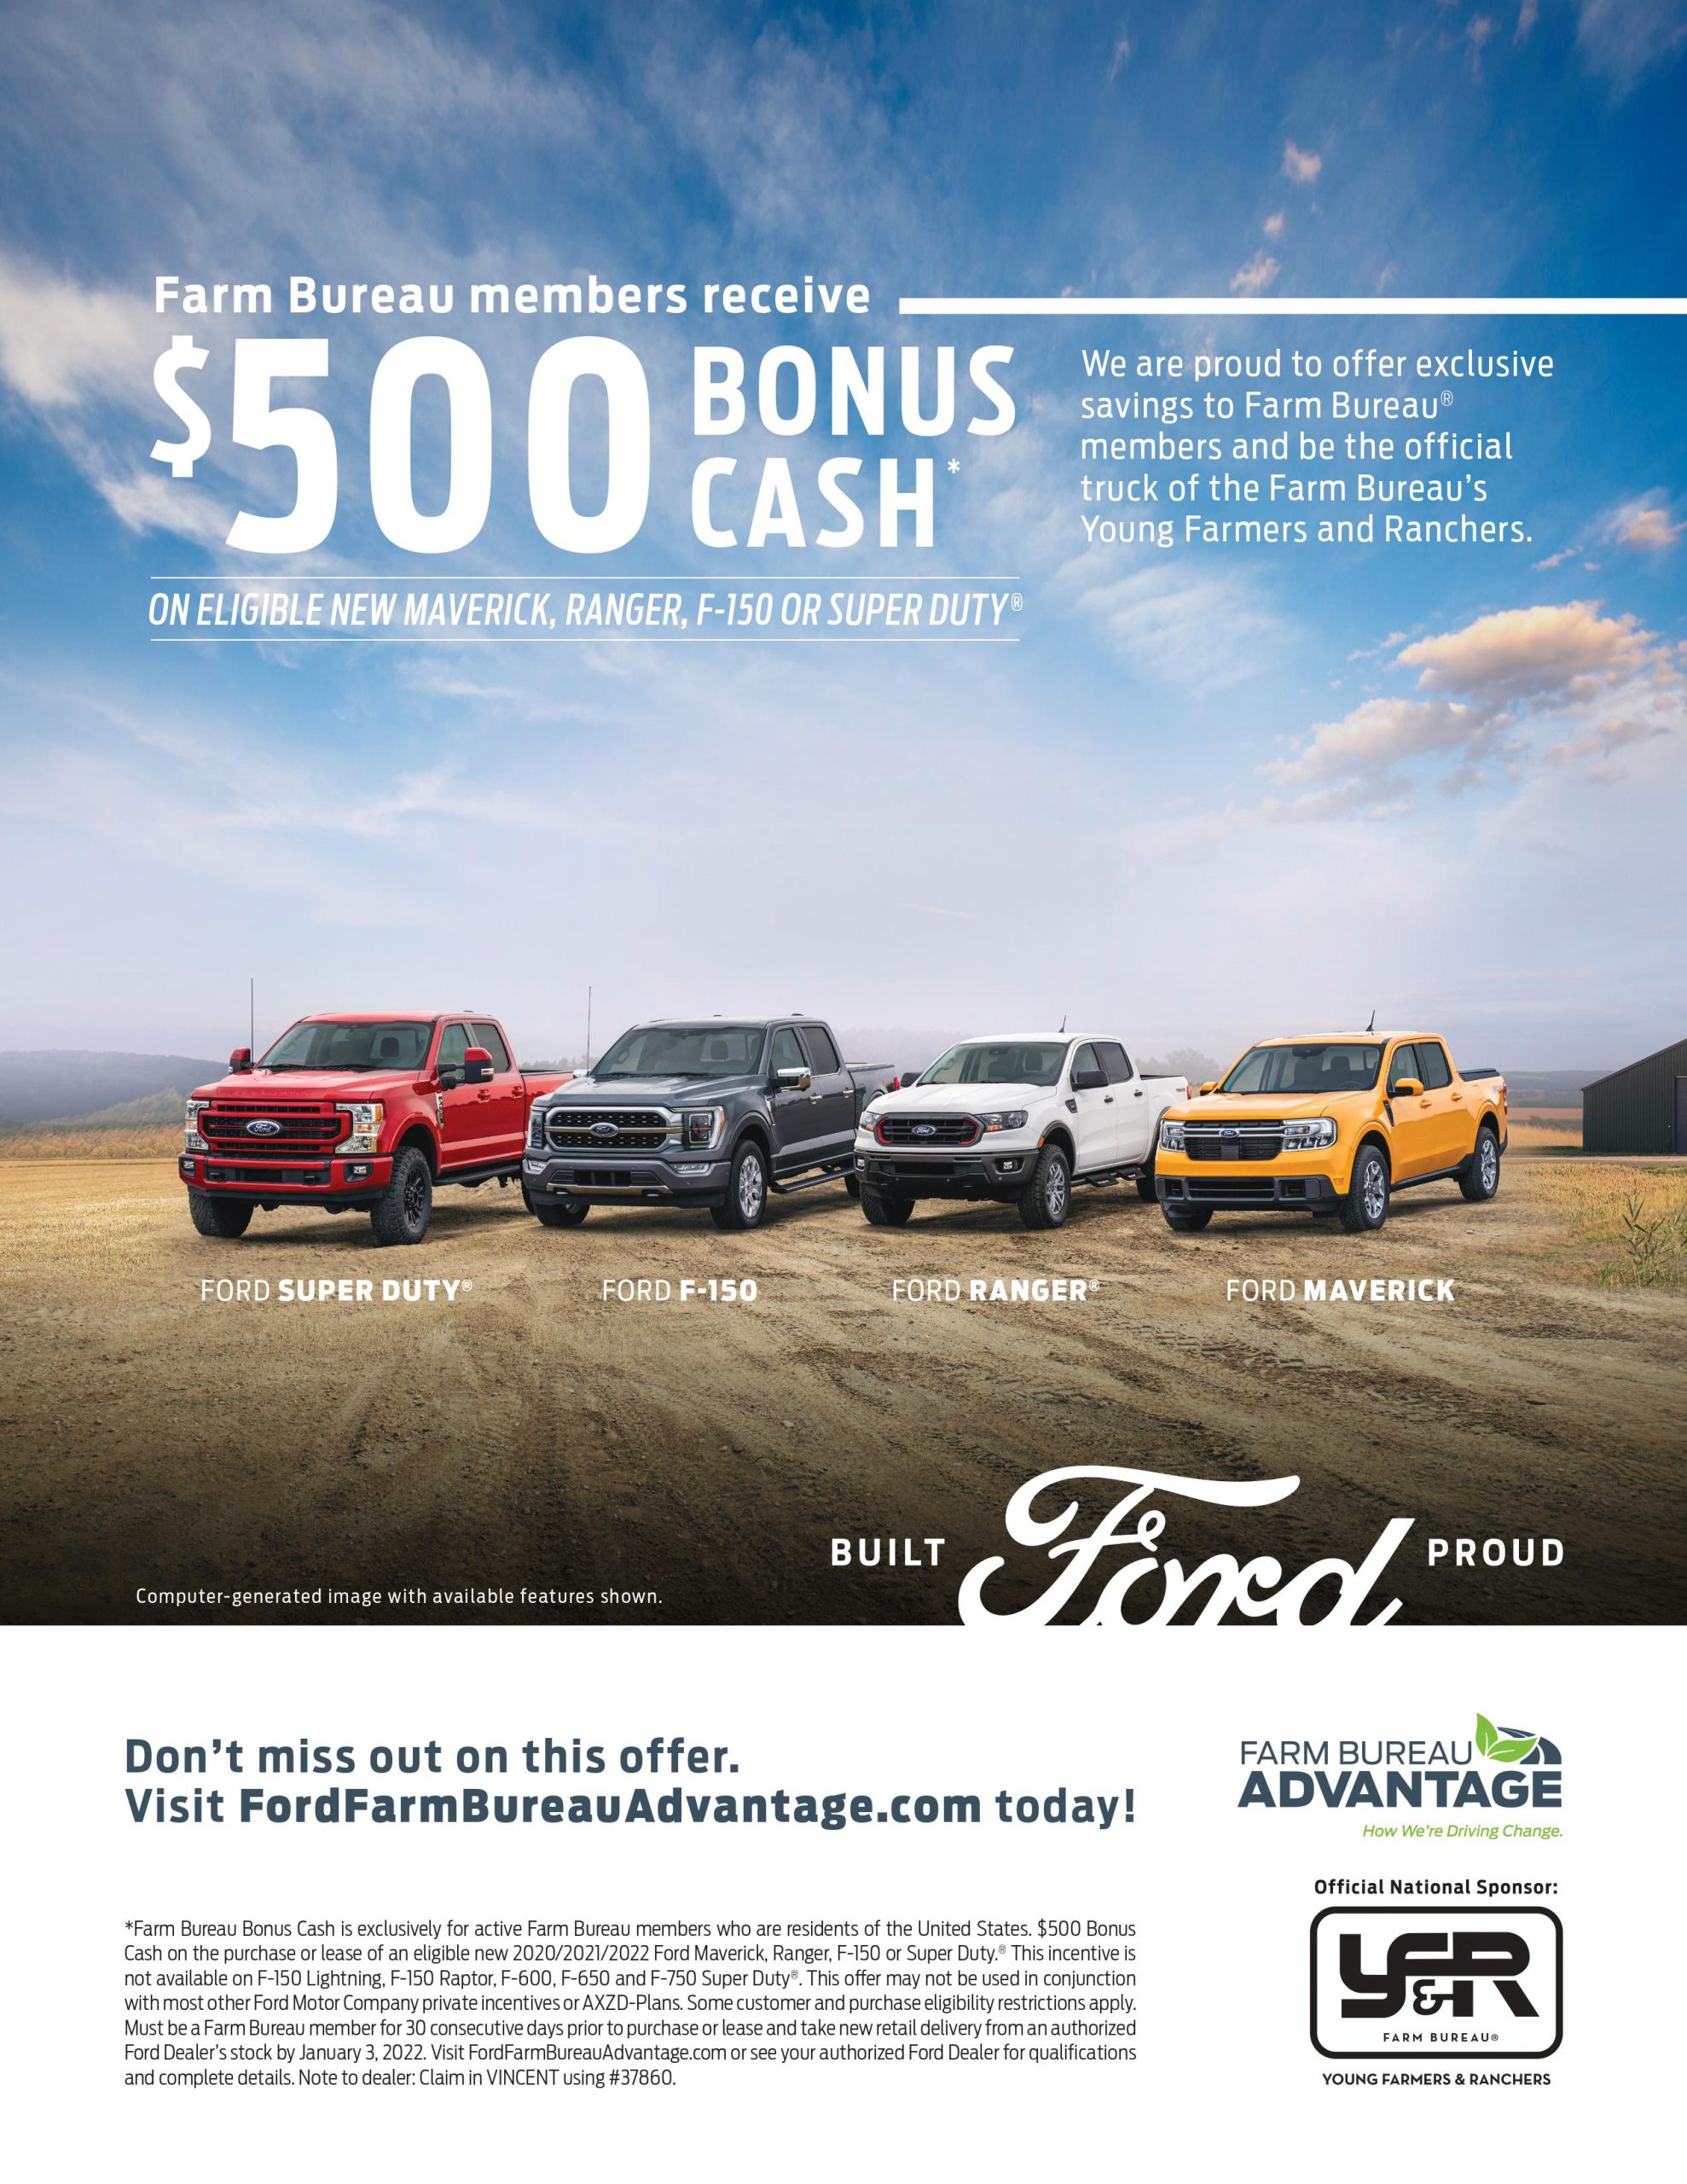 Ford 500 Bonus Cash! Rhode Island Farm Bureau